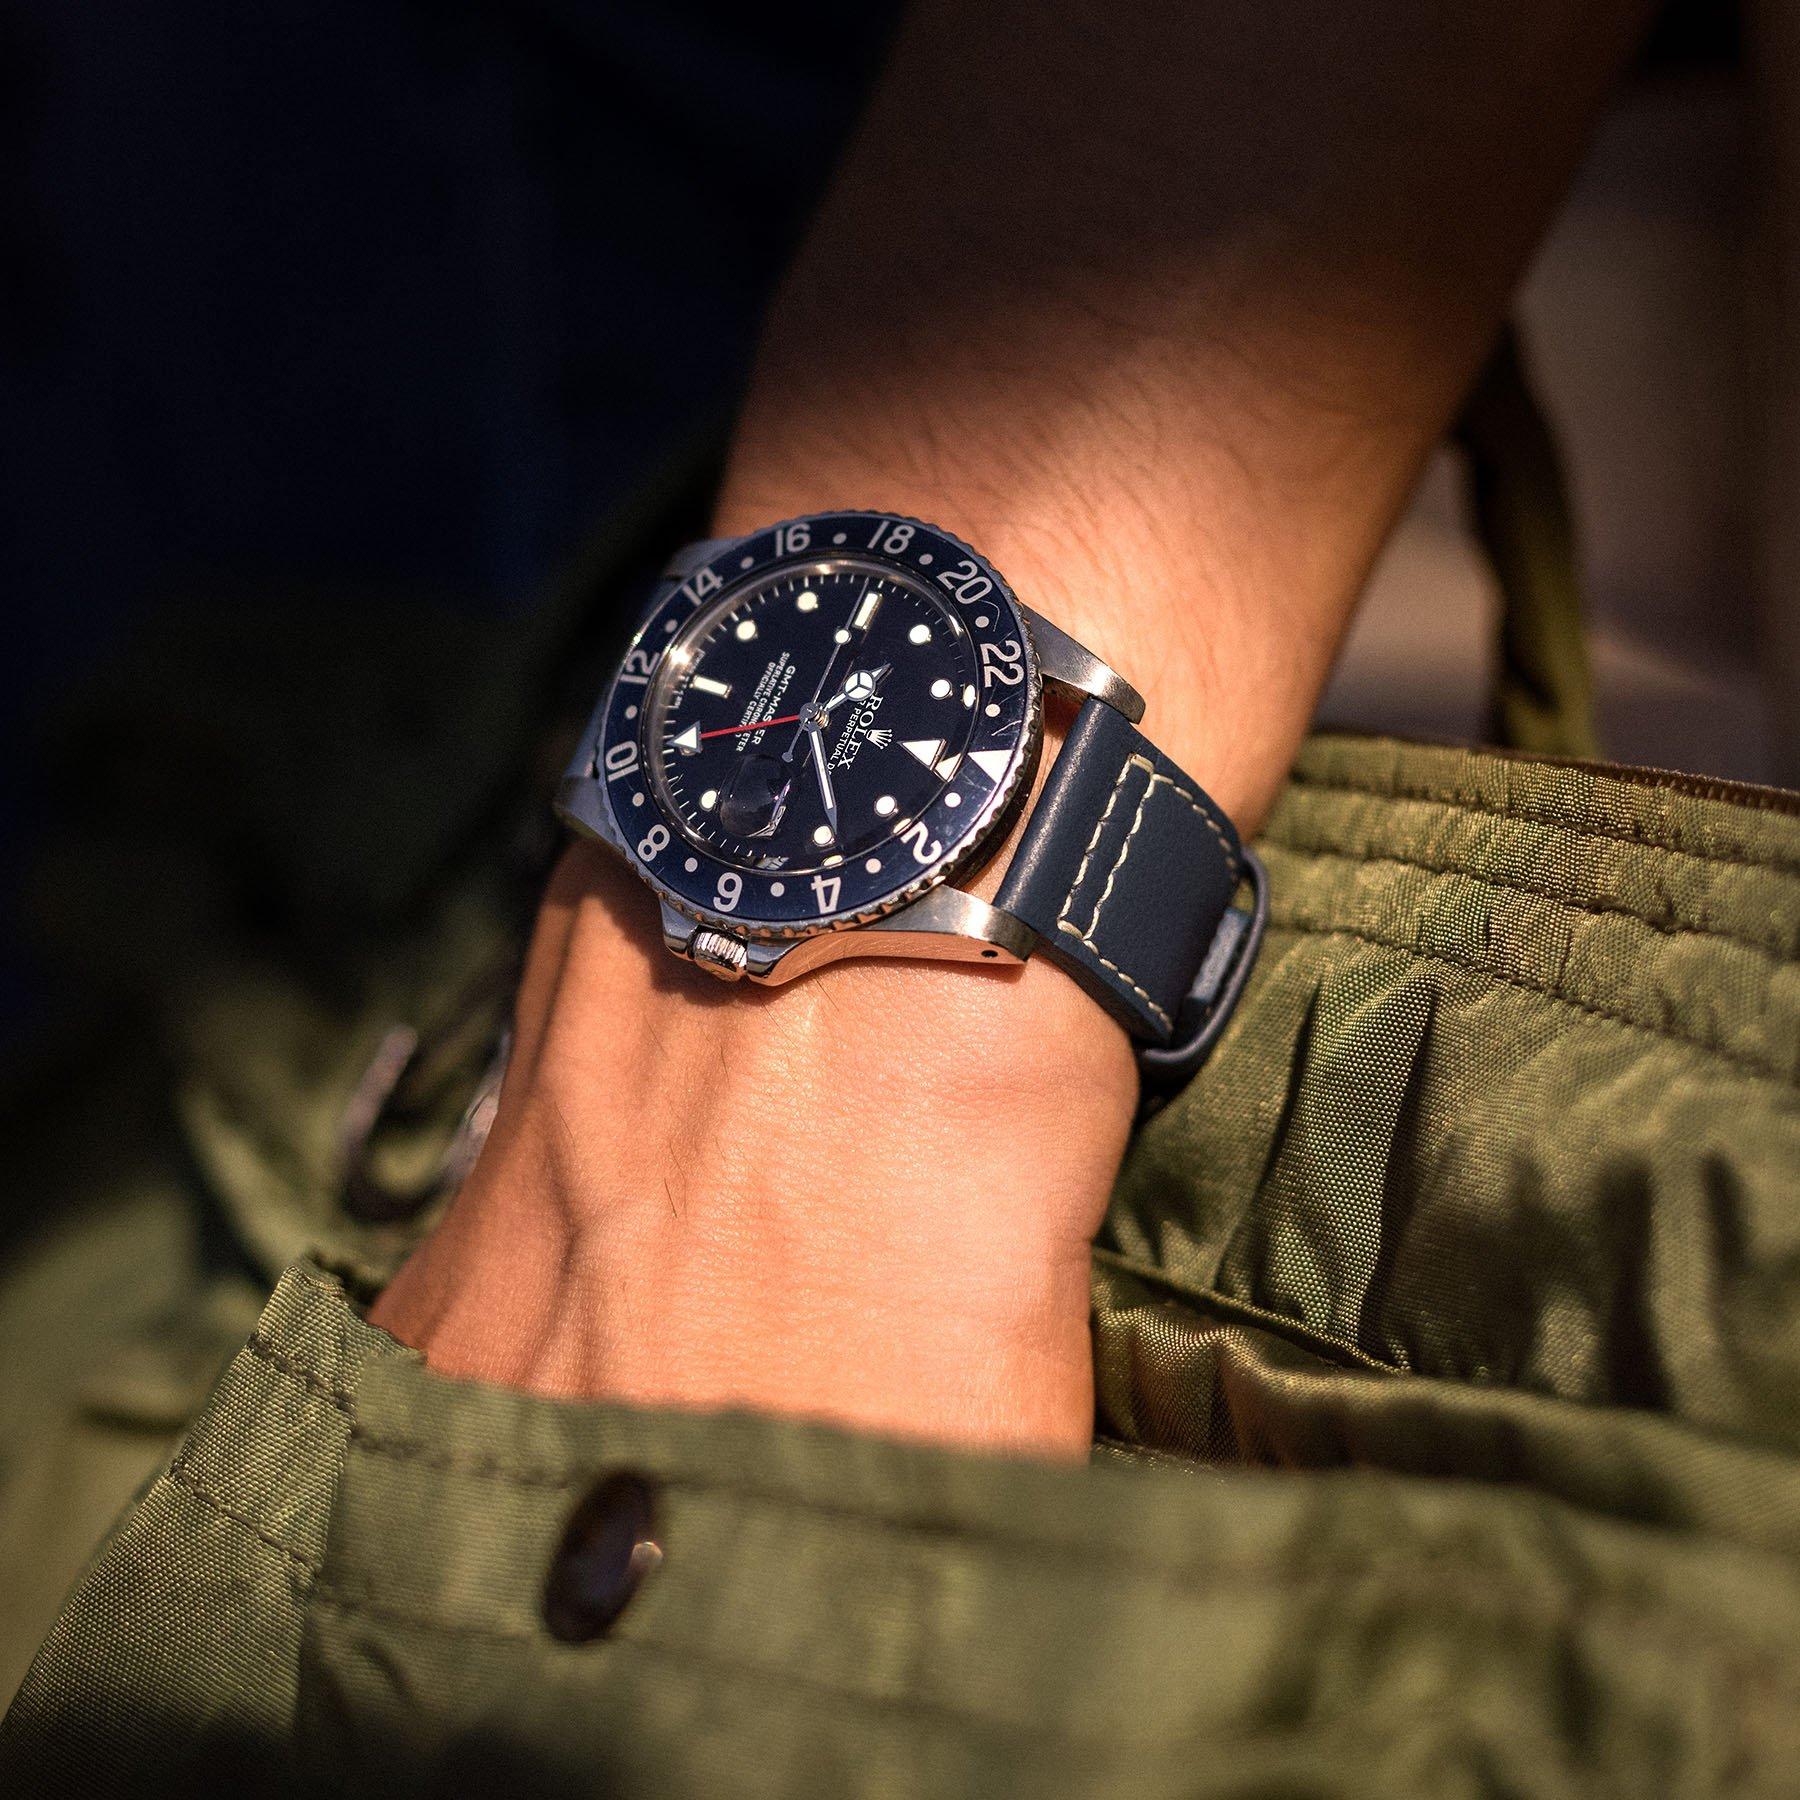 VIPR Blue Aviator Leren Horlogeband